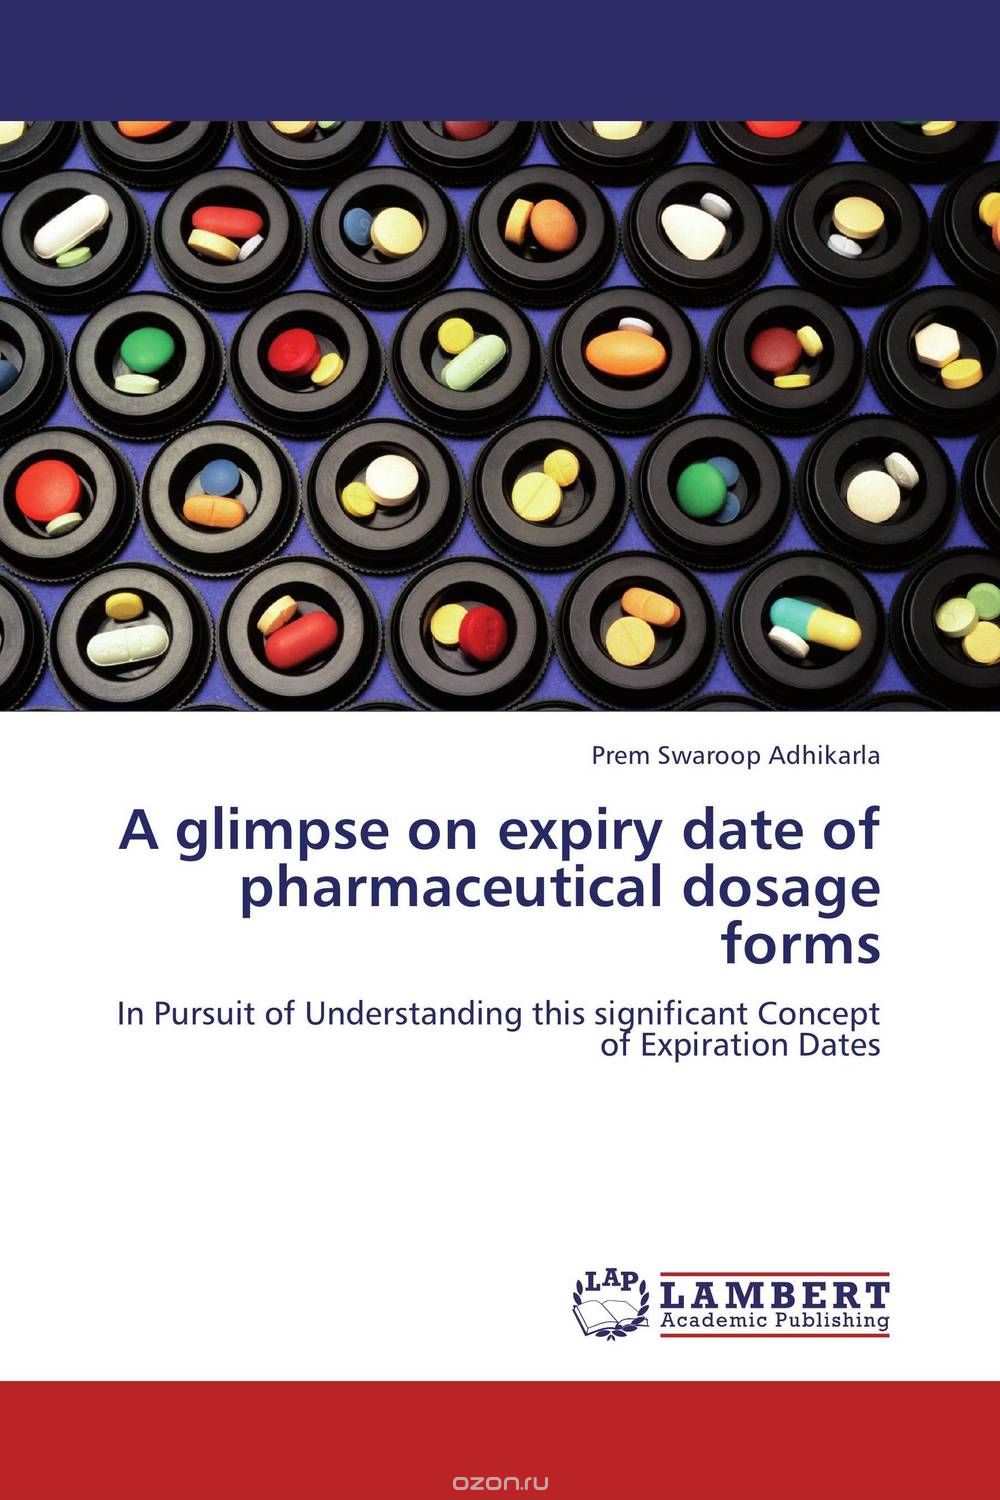 Скачать книгу "A glimpse on expiry date of pharmaceutical dosage forms"